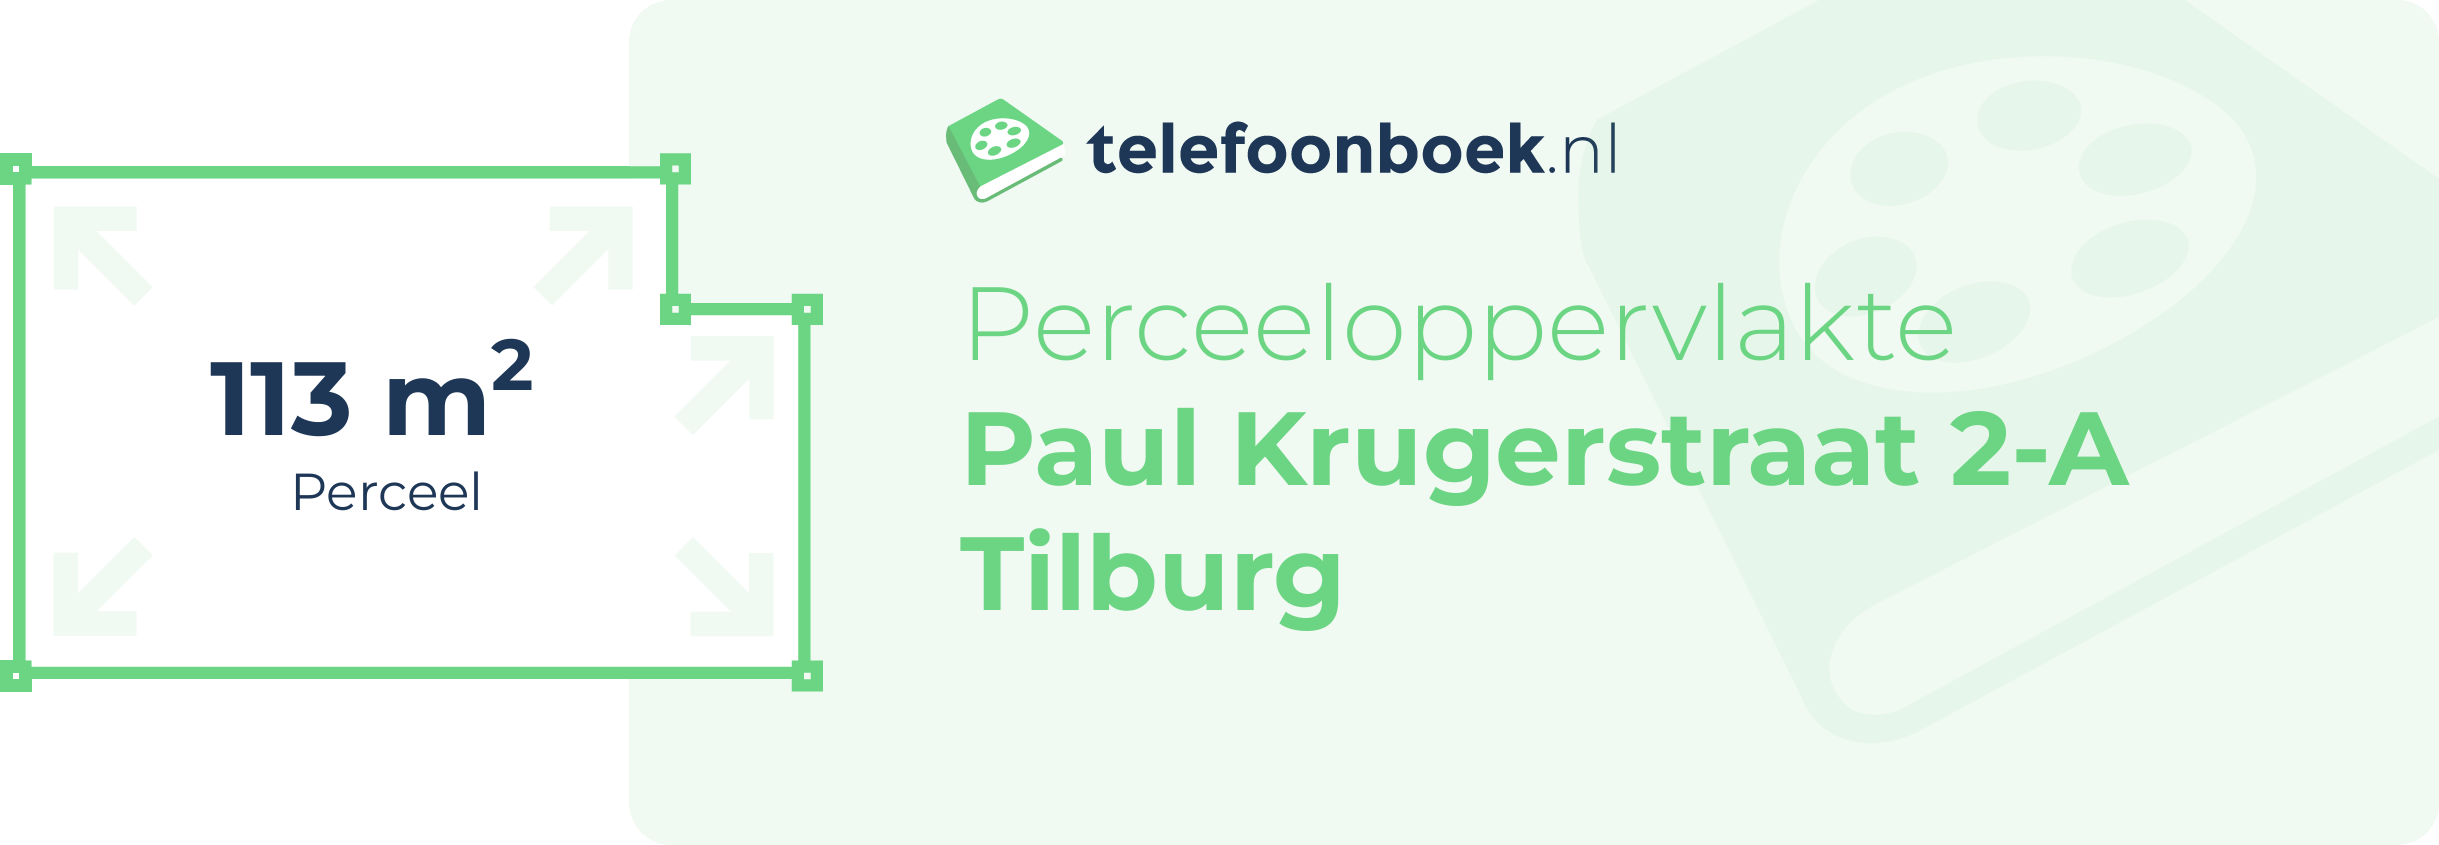 Perceeloppervlakte Paul Krugerstraat 2-A Tilburg